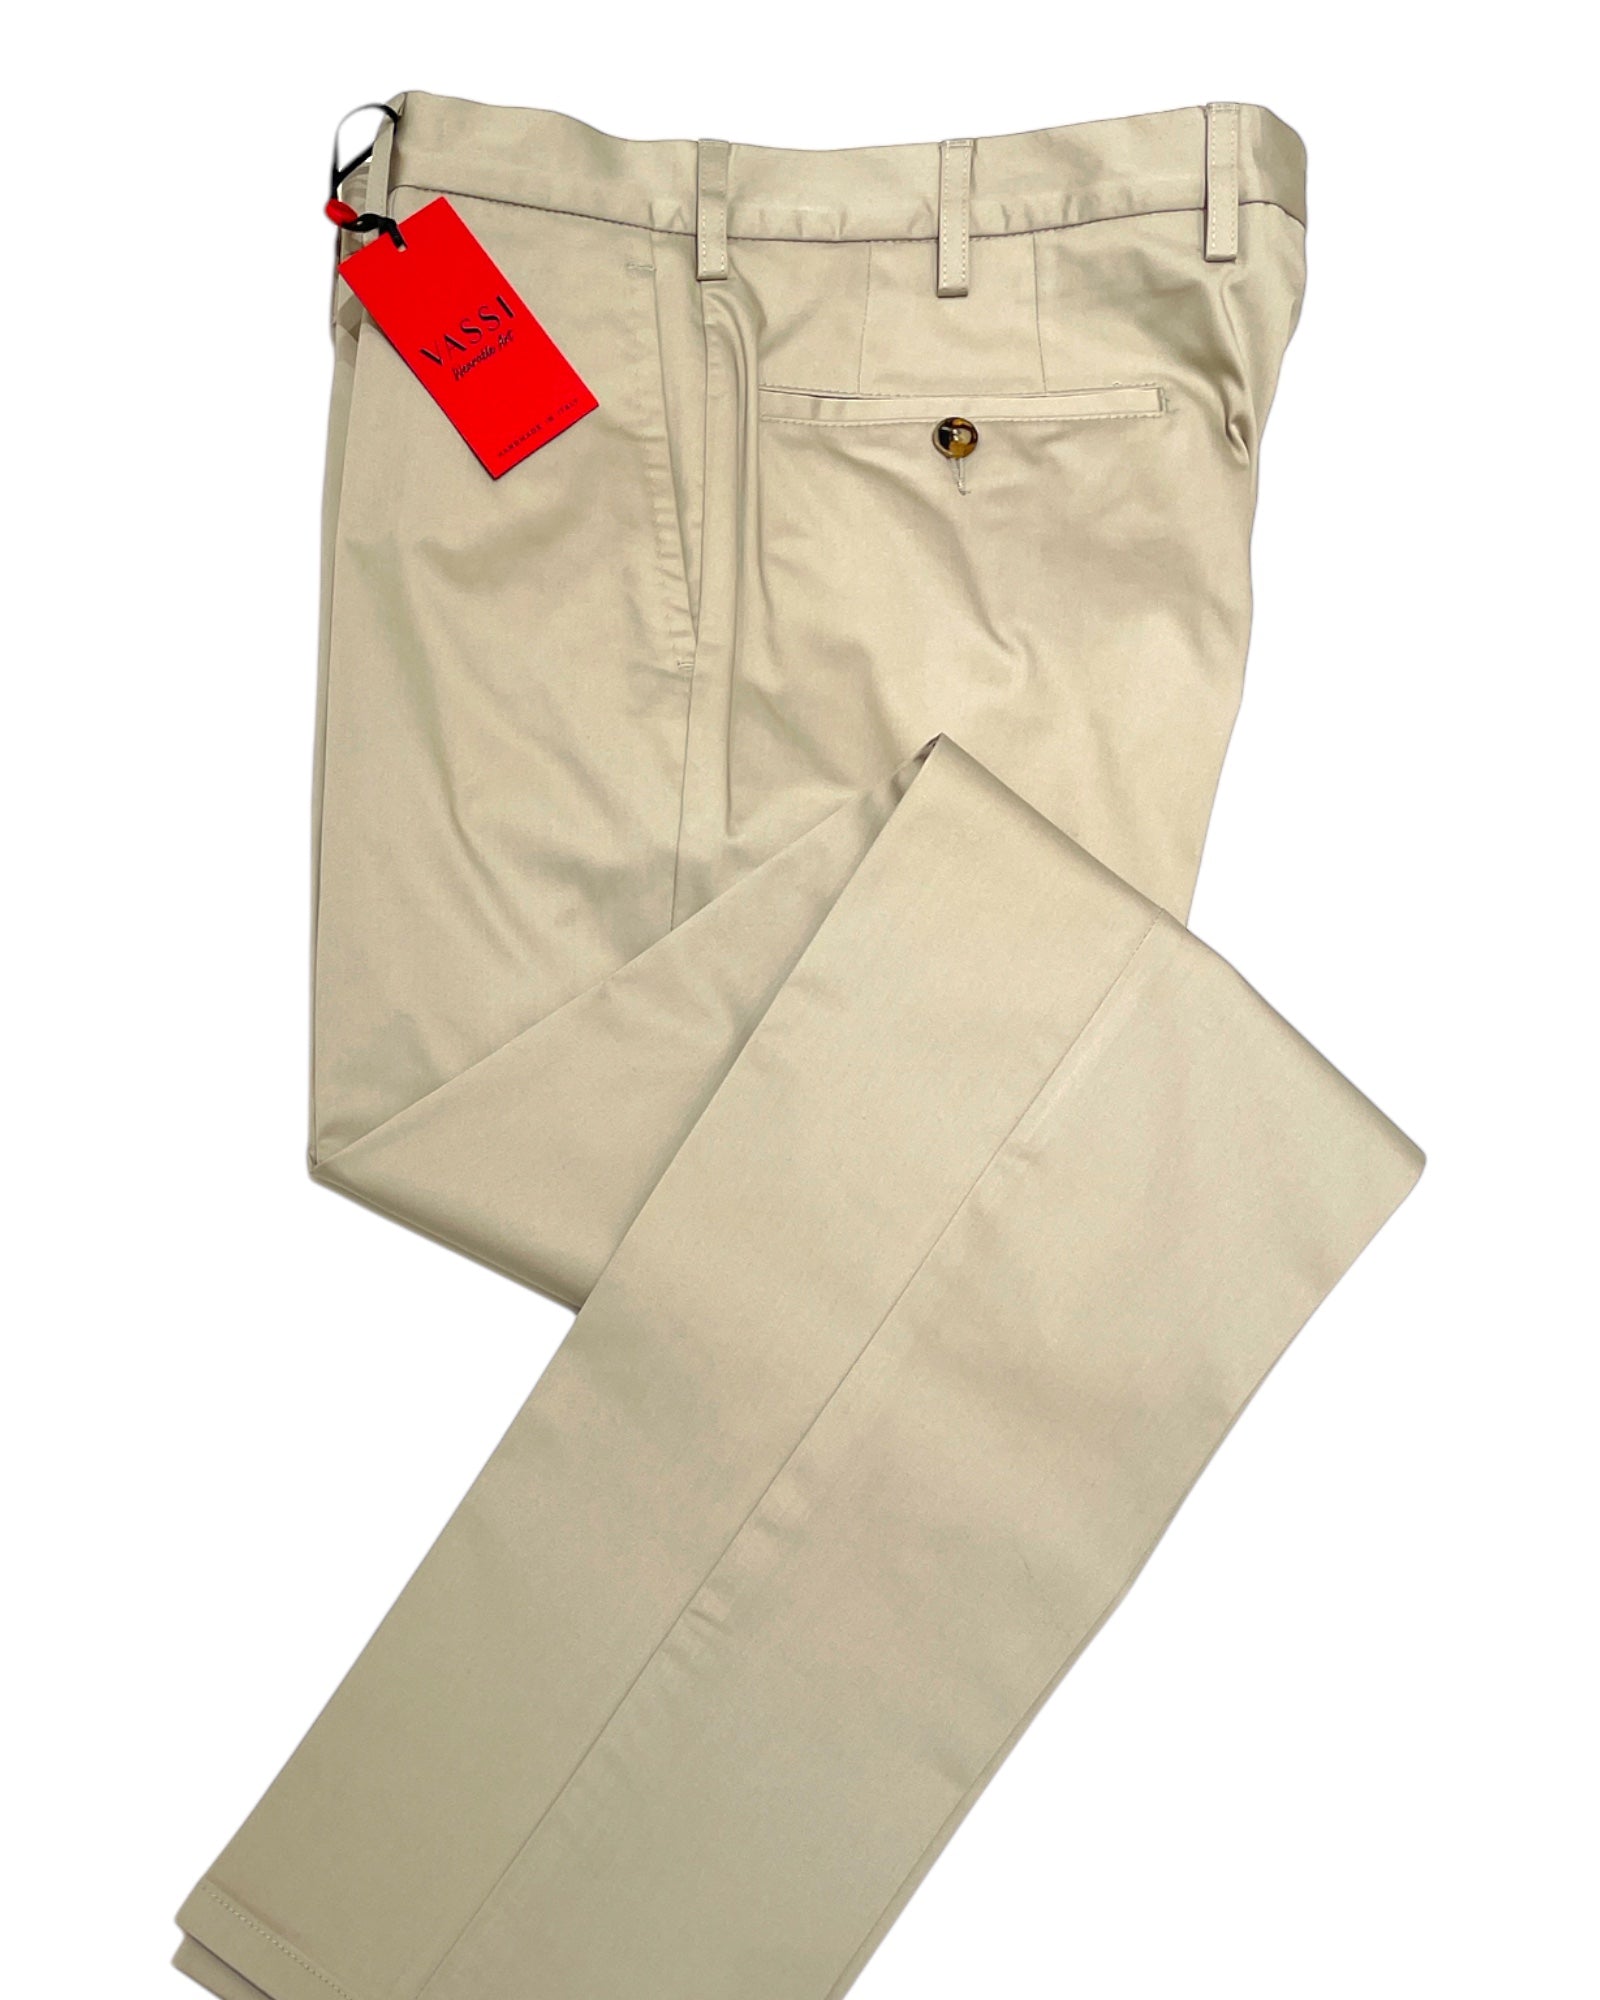 VASSI Flat Front Sartorial Stretch-Cotton Trousers - Khaki CASUAL PANTS48 EU